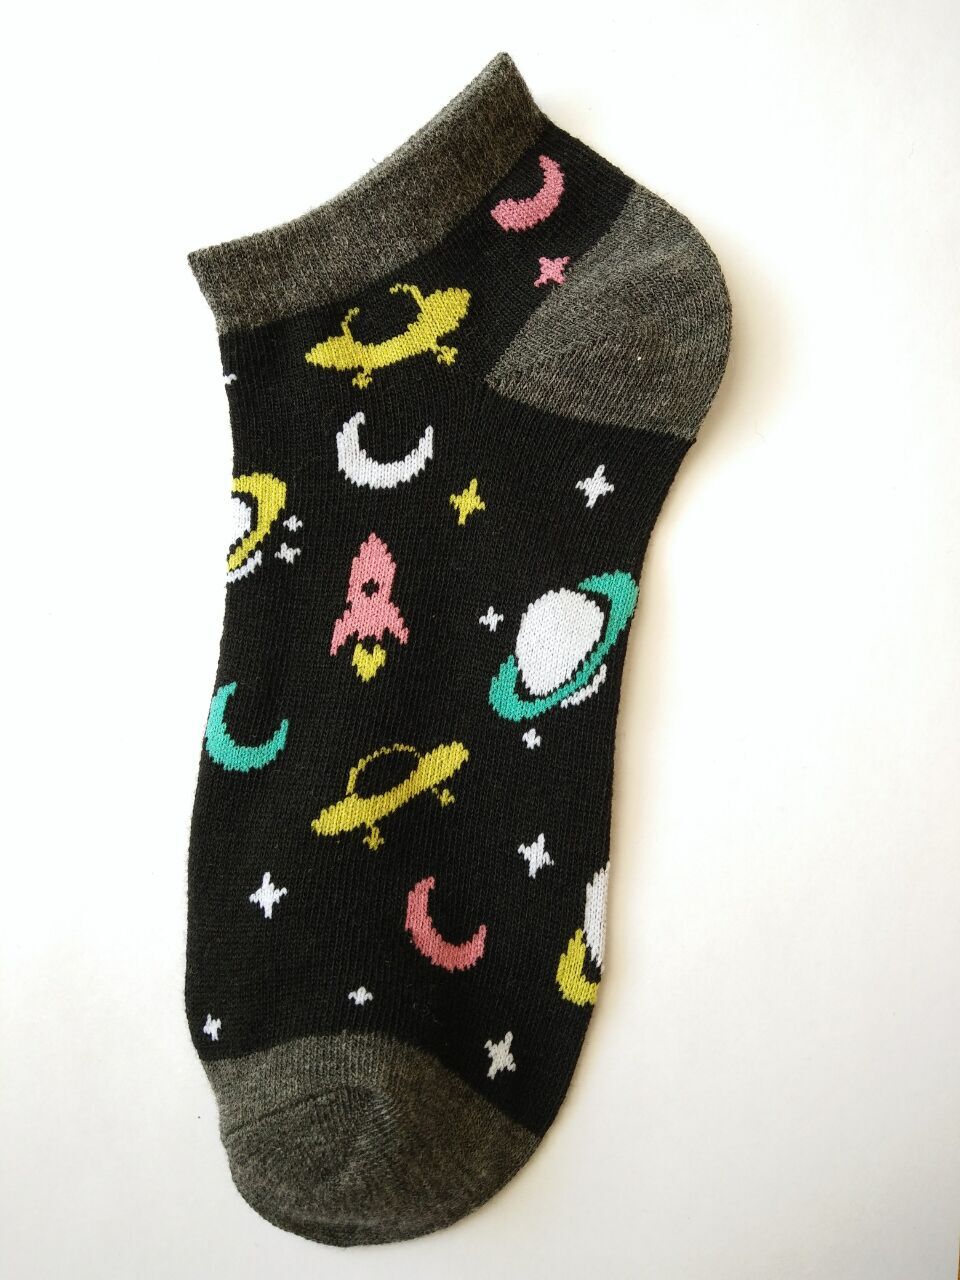 Happy socks